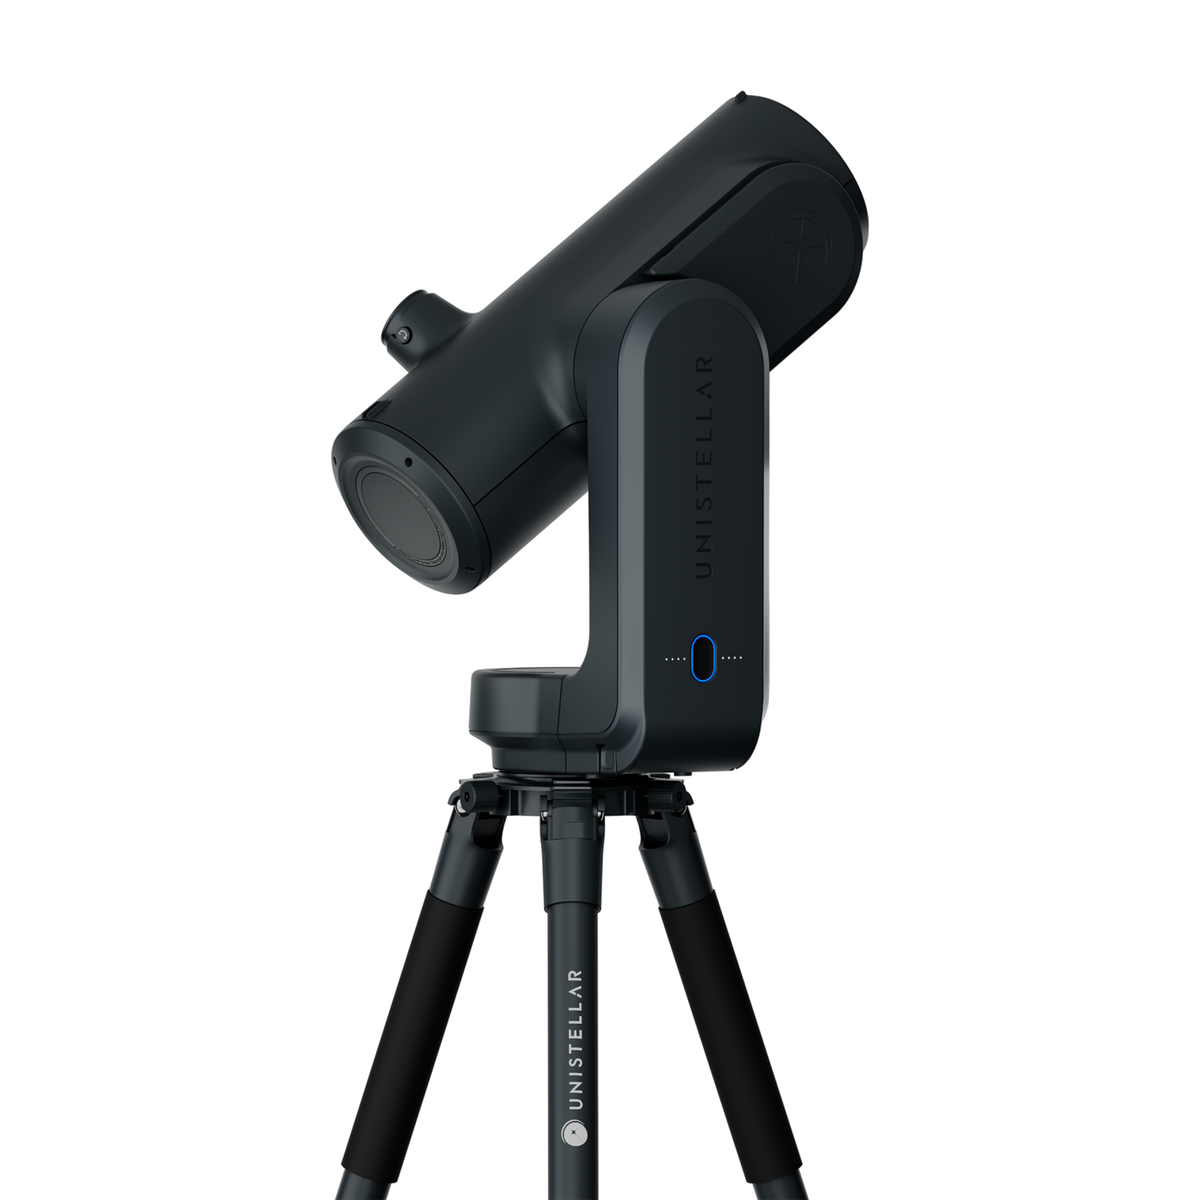 OLED display – Odyssey smart ✨ - telescope Unistellar Rollei Pro with